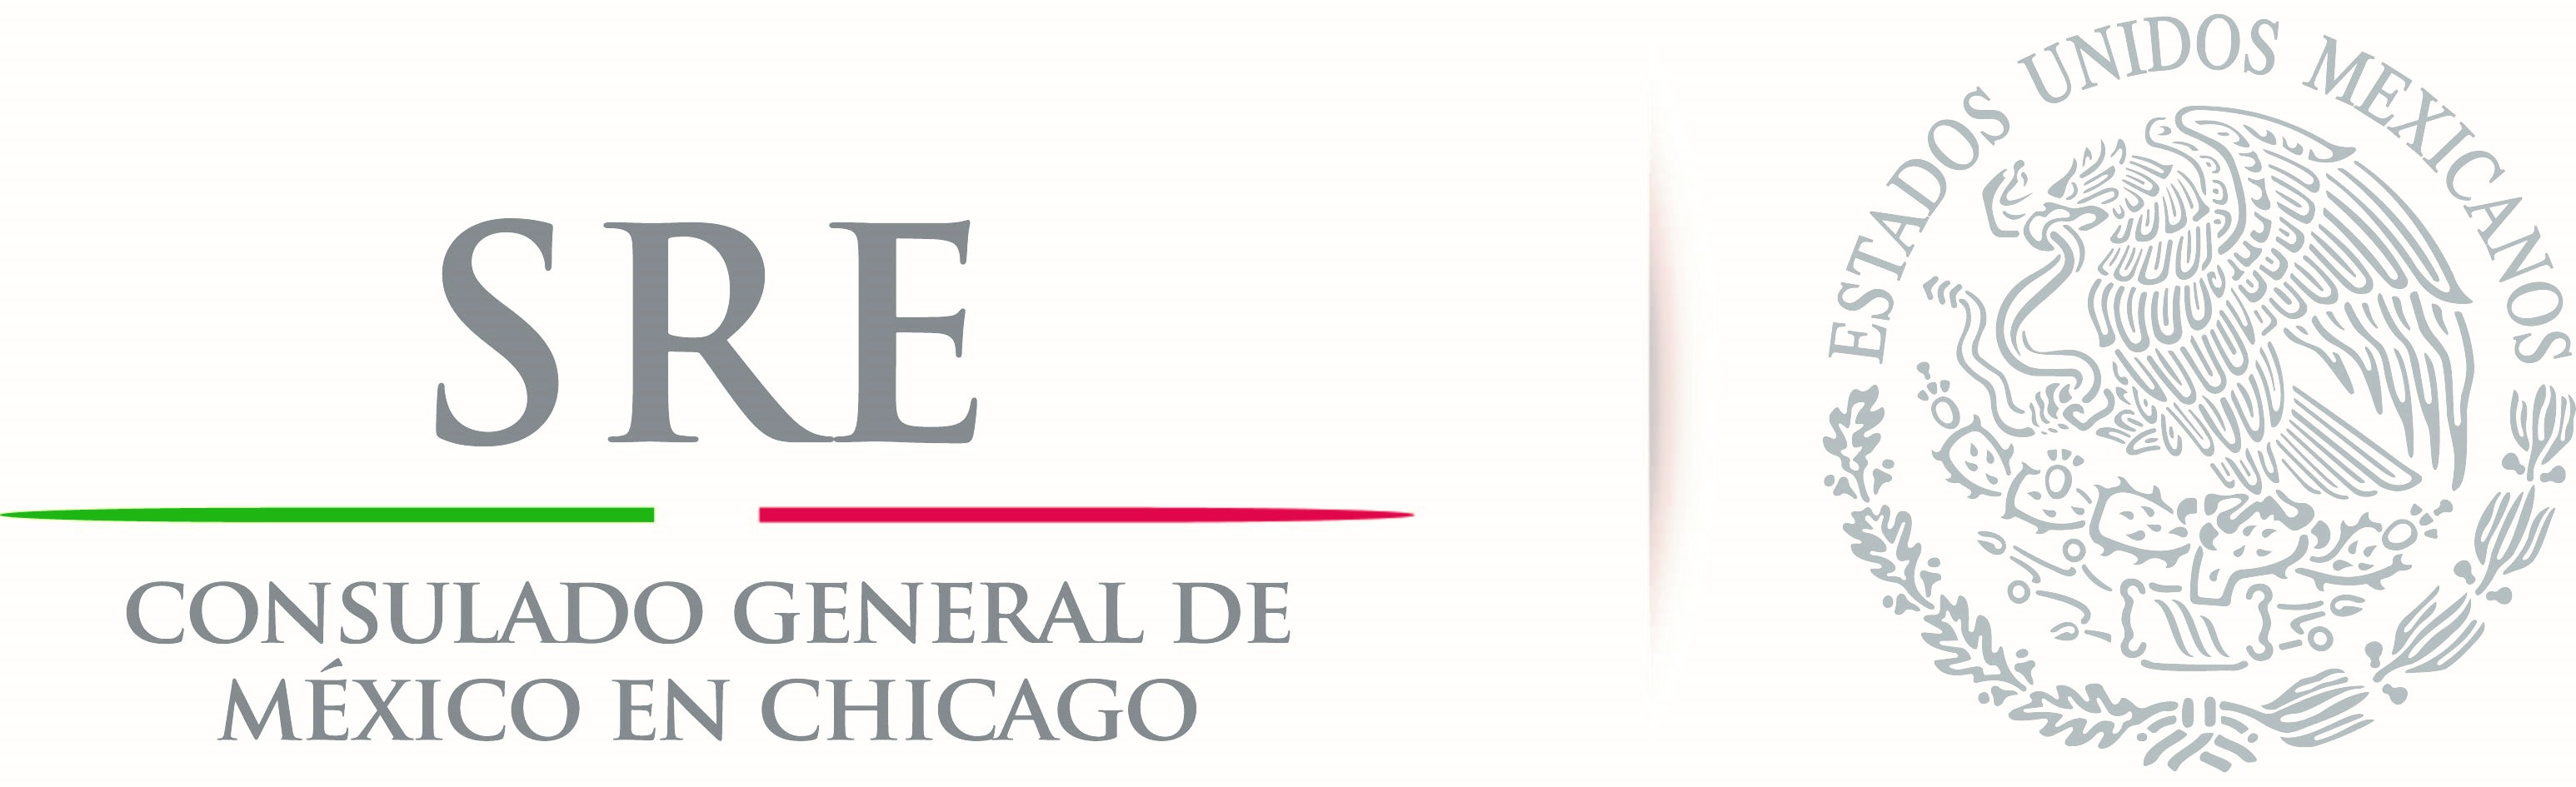 Consulado General de Mexico en Chicago